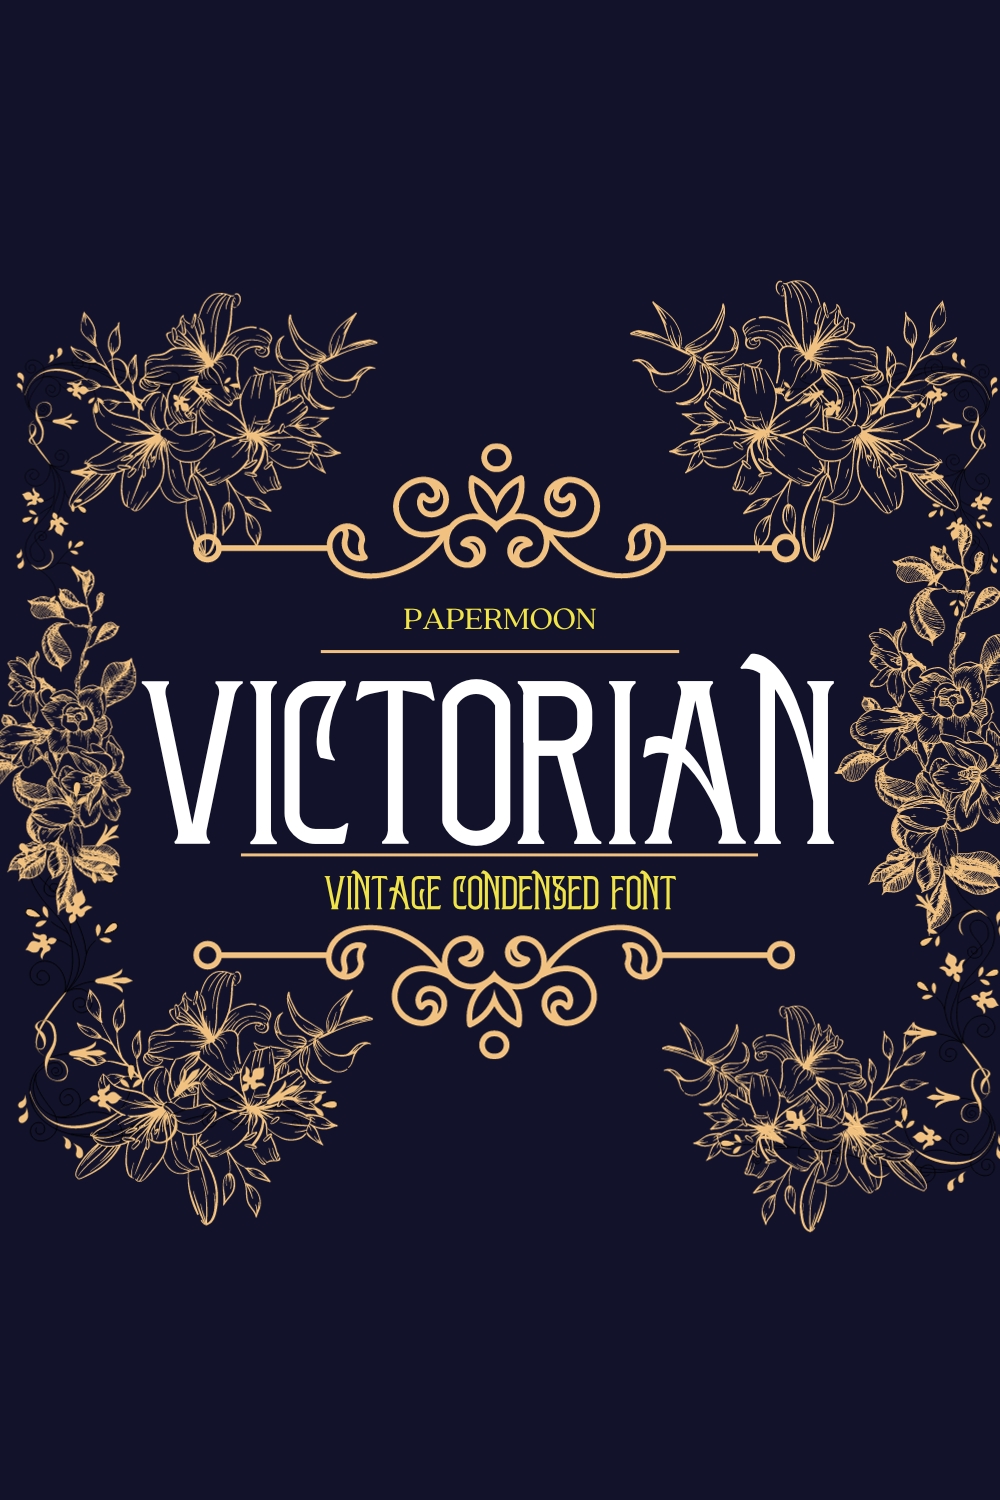 Victorian - Vintage Condensed Display Font pinterest preview image.